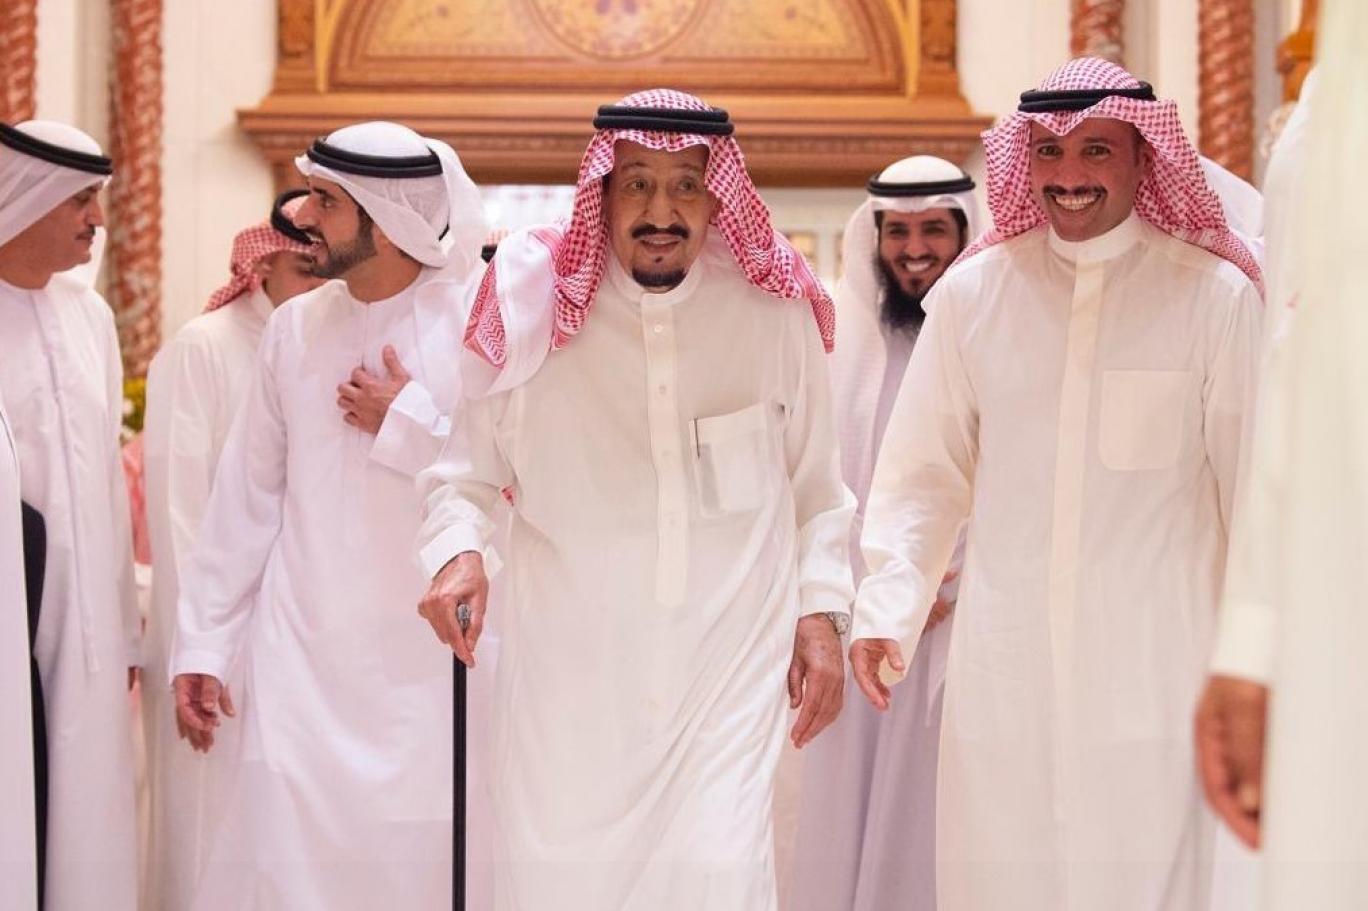 Развлечение шейхов. Шейх Дубая Абдулазиз. Дворец принца в Дубае. Одежда шейха. Одежда арабских шейхов.